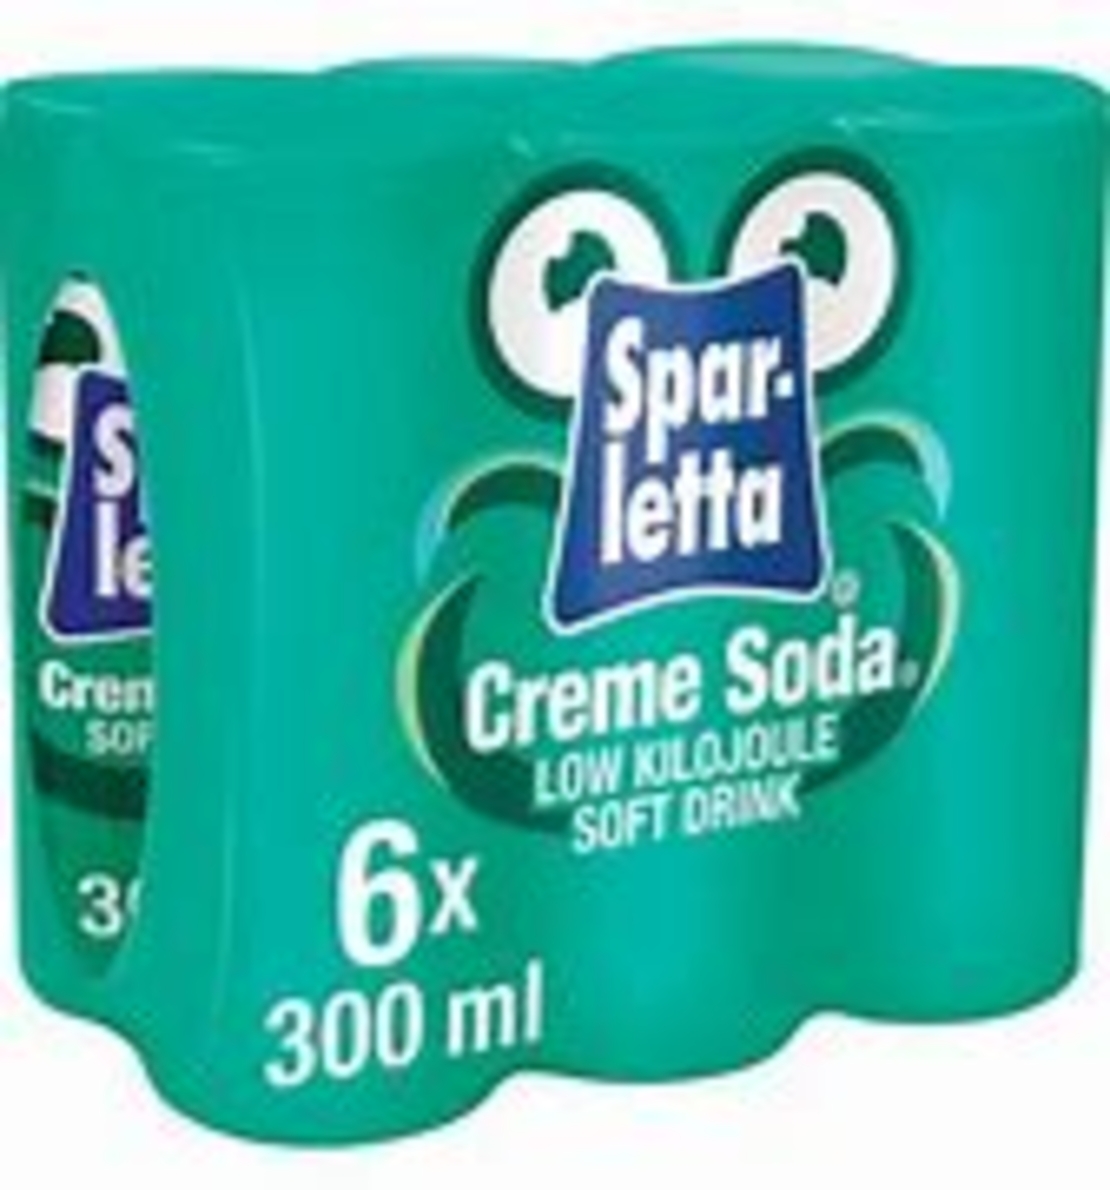 Sparletta Creme Soda 300 ml - Clearance